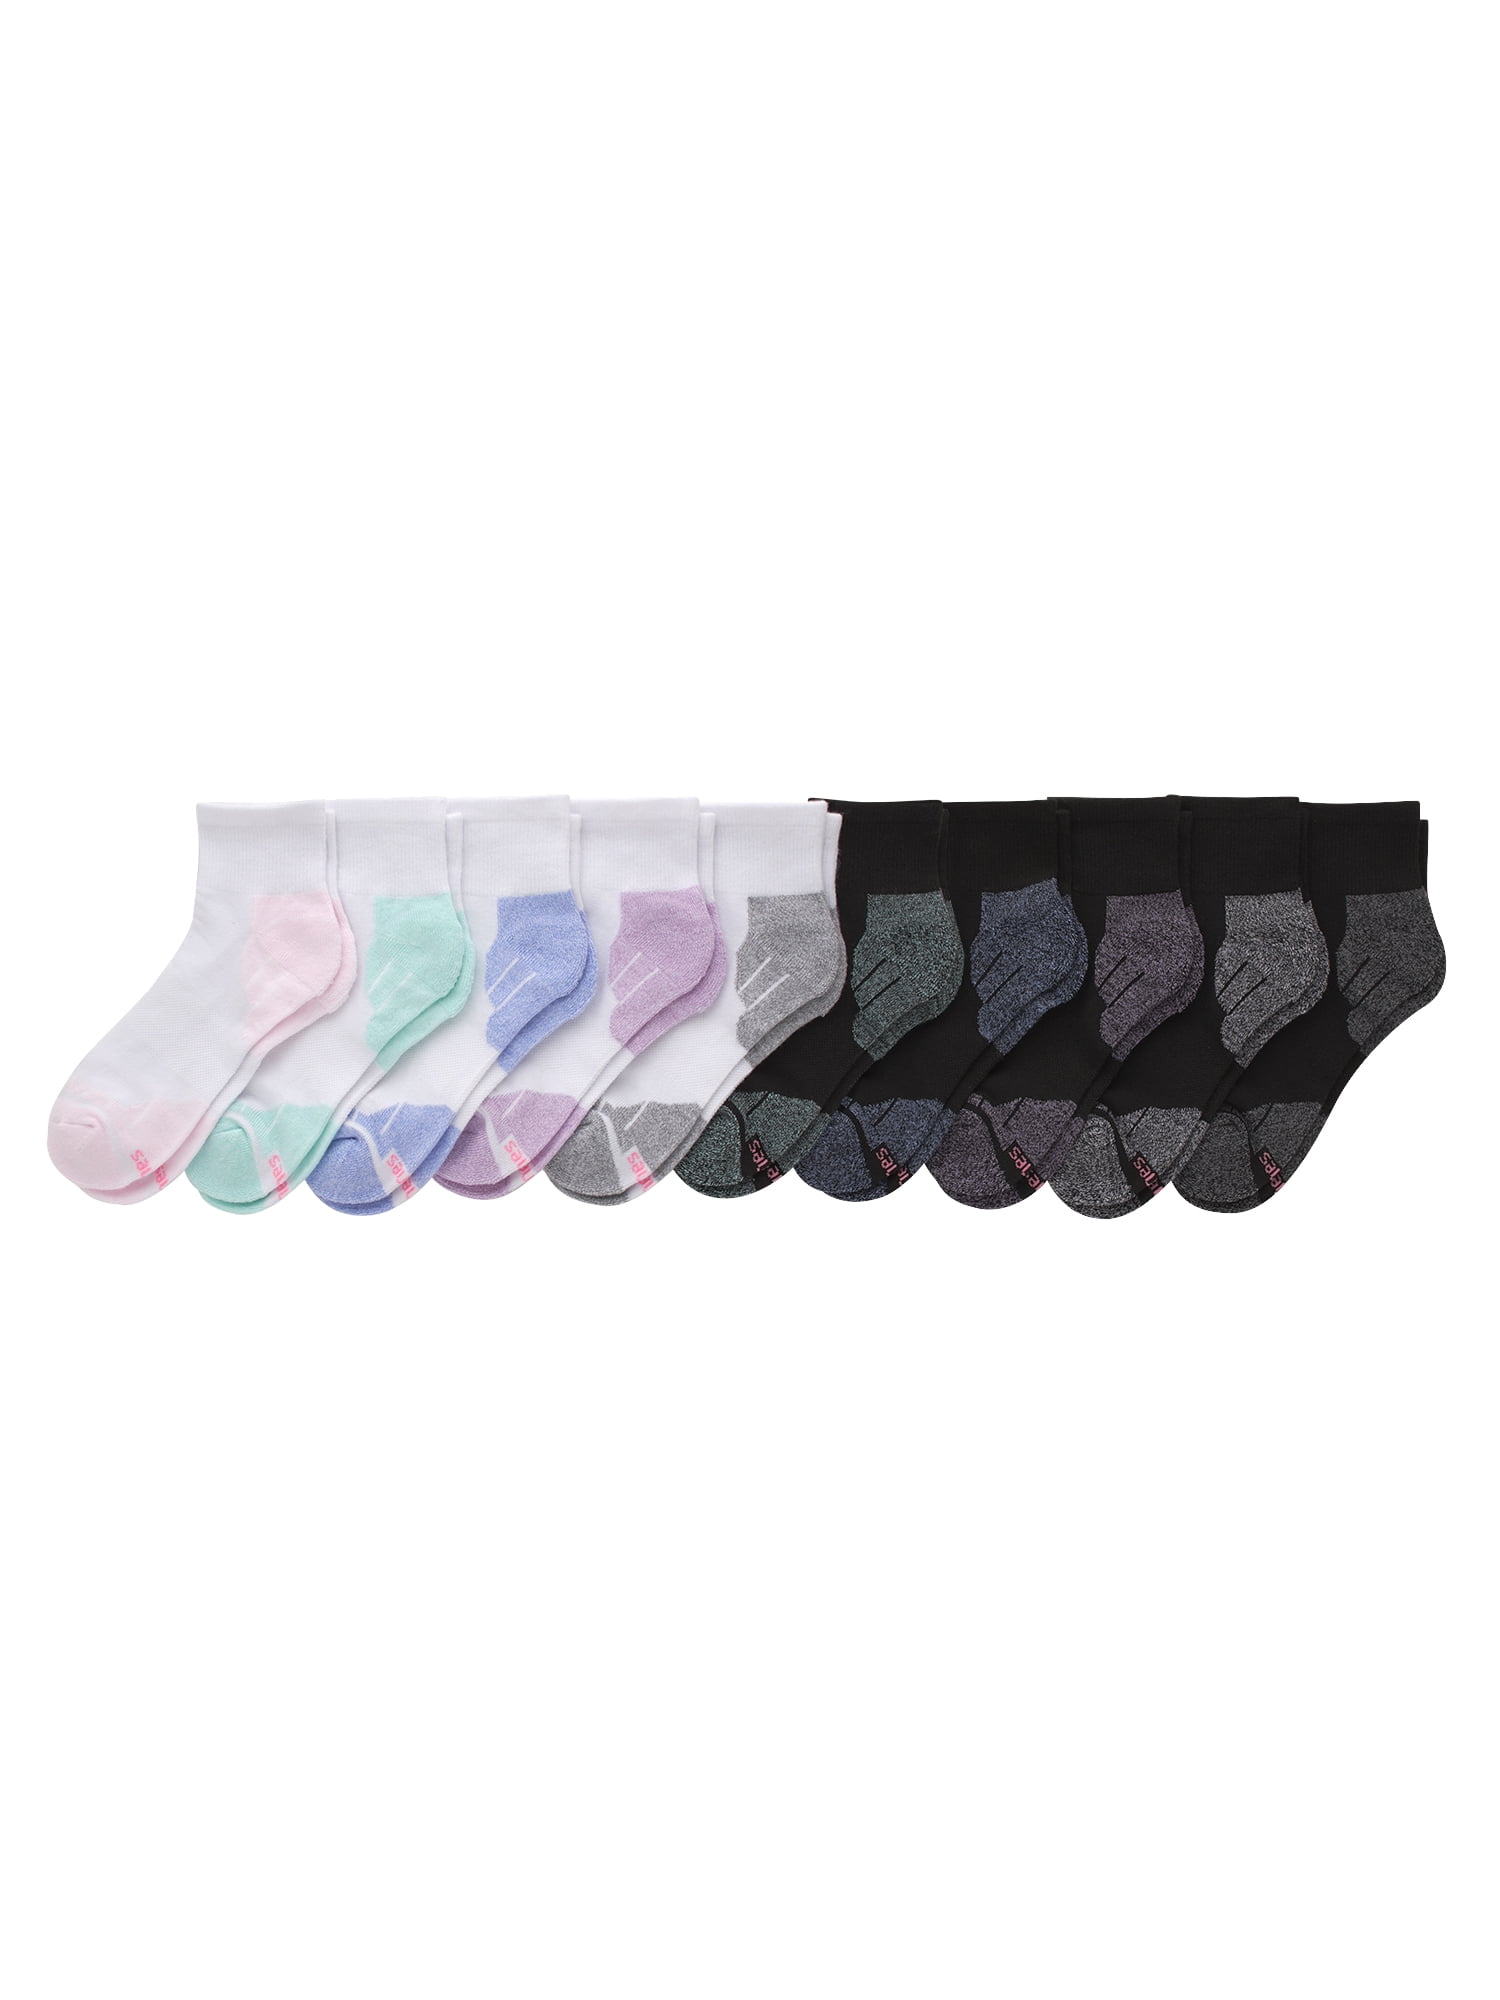 Hanes Women's Socks Comfort Fit Ankle, 10 Pairs - Walmart.com